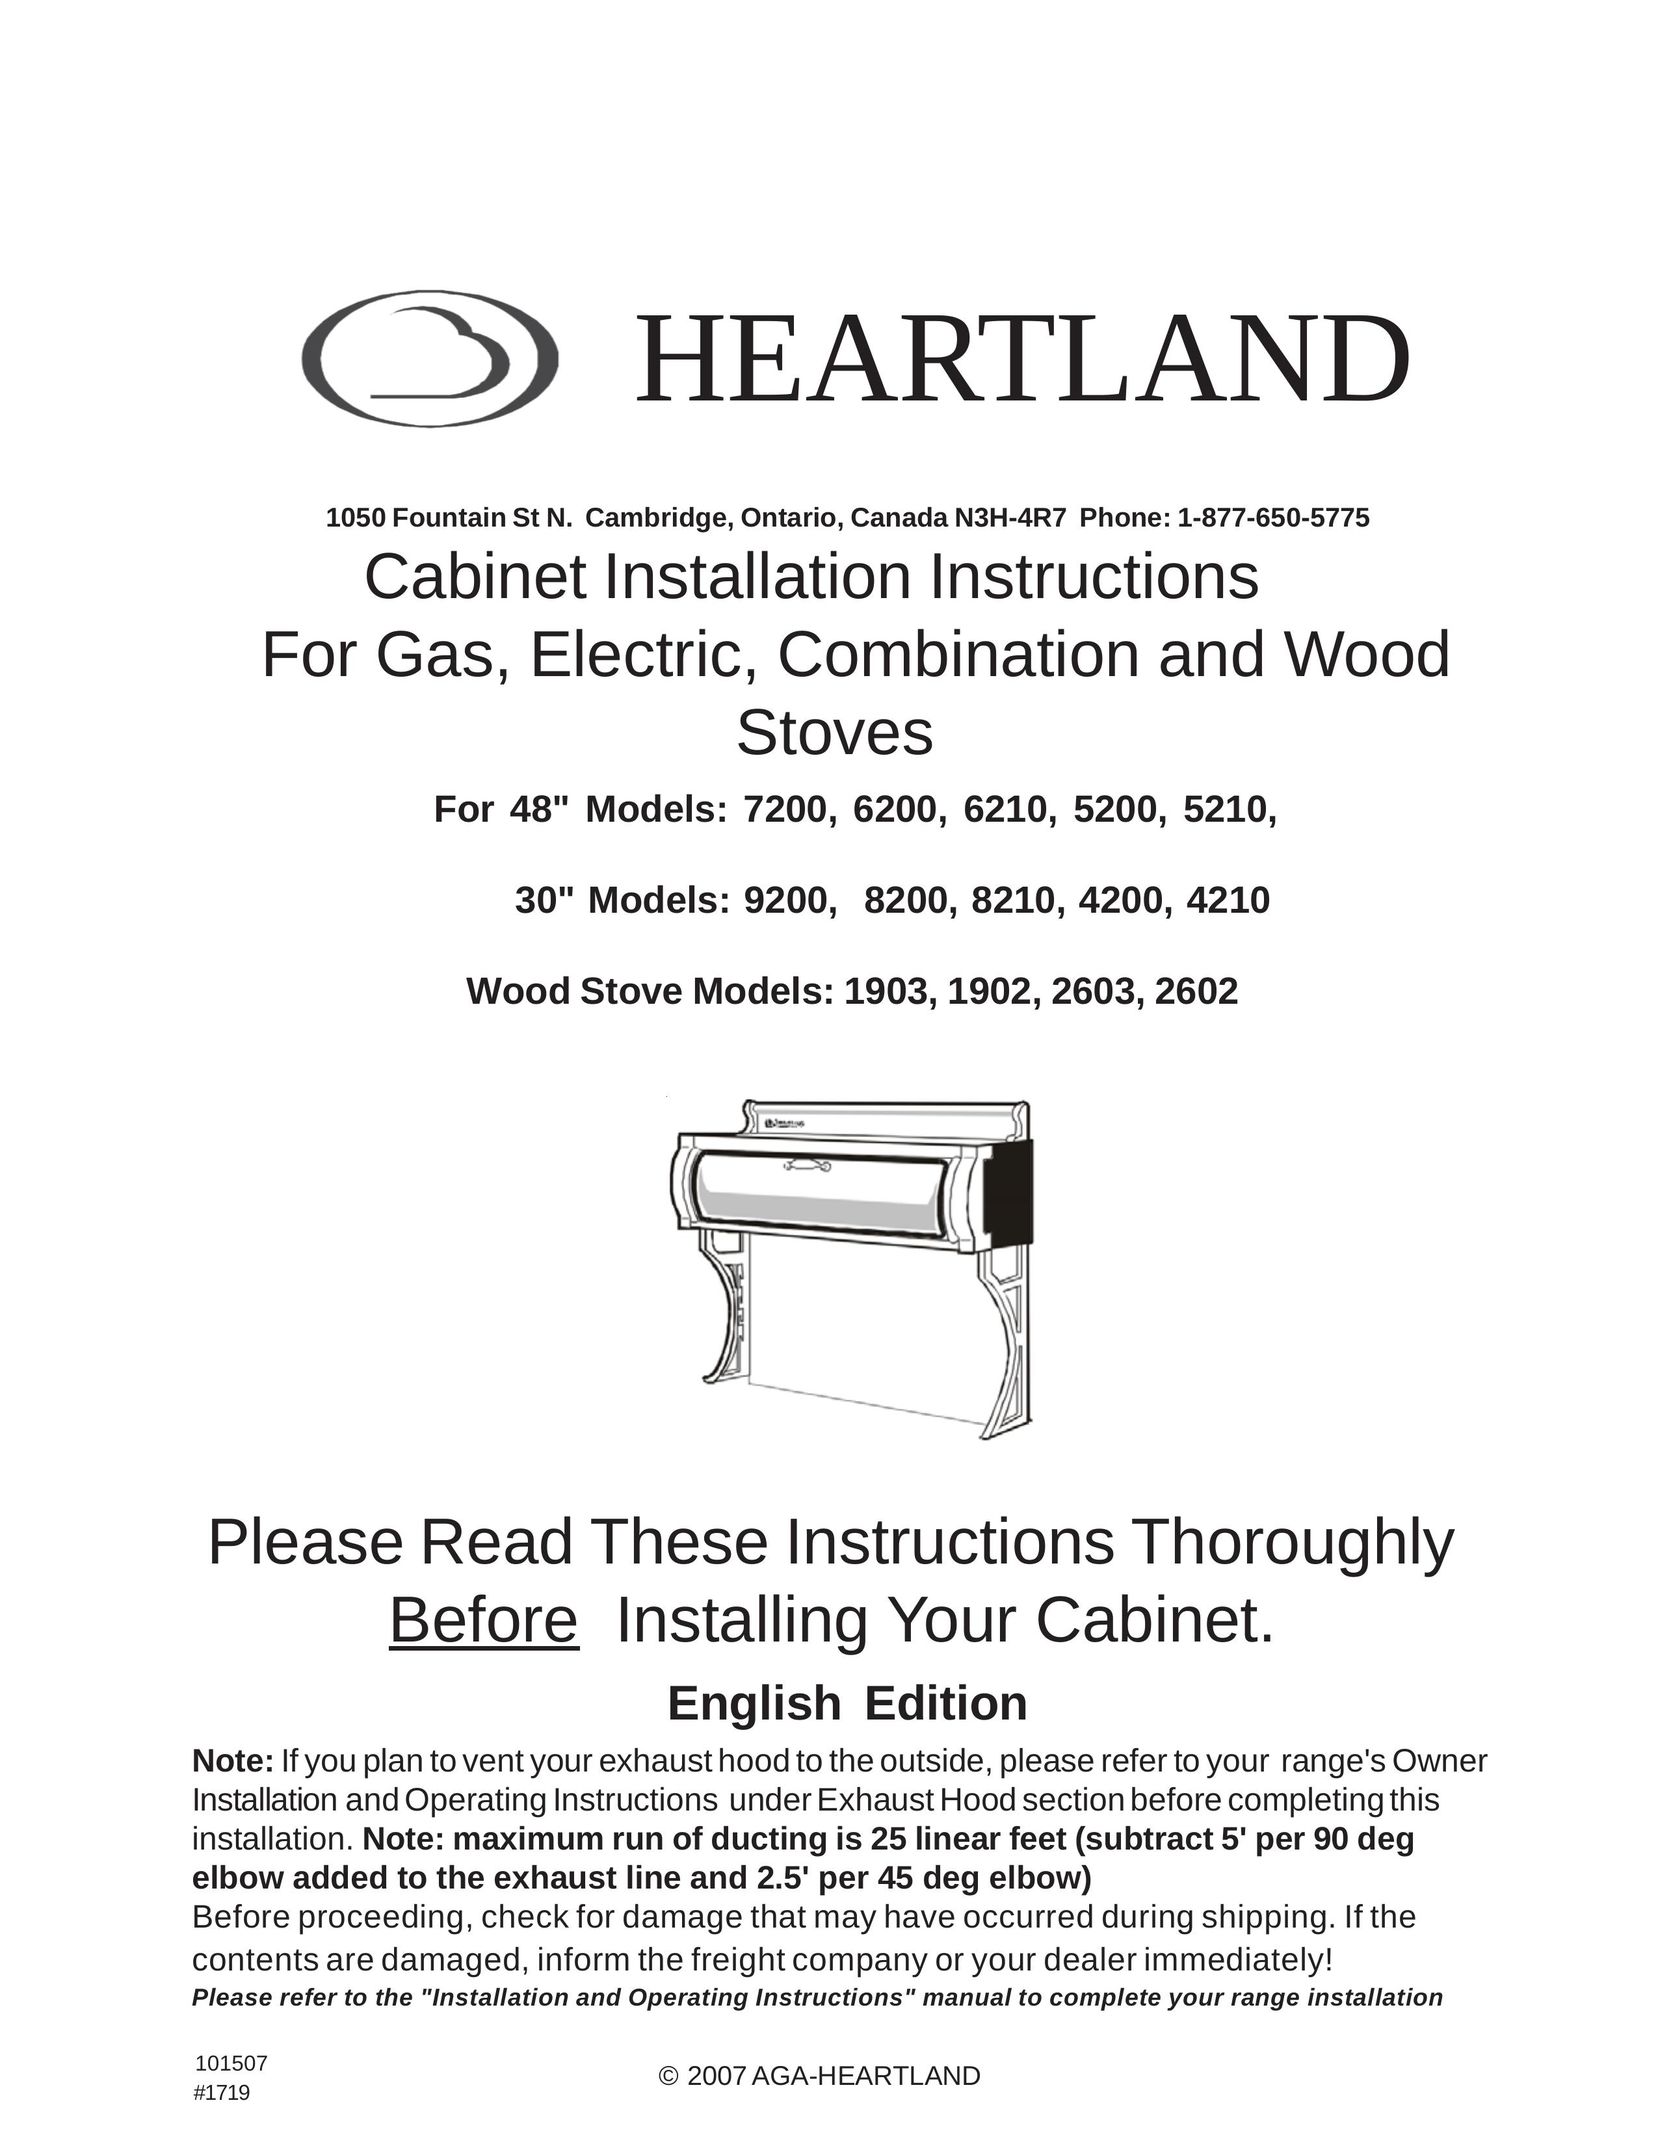 Heartland 1903 Stove User Manual